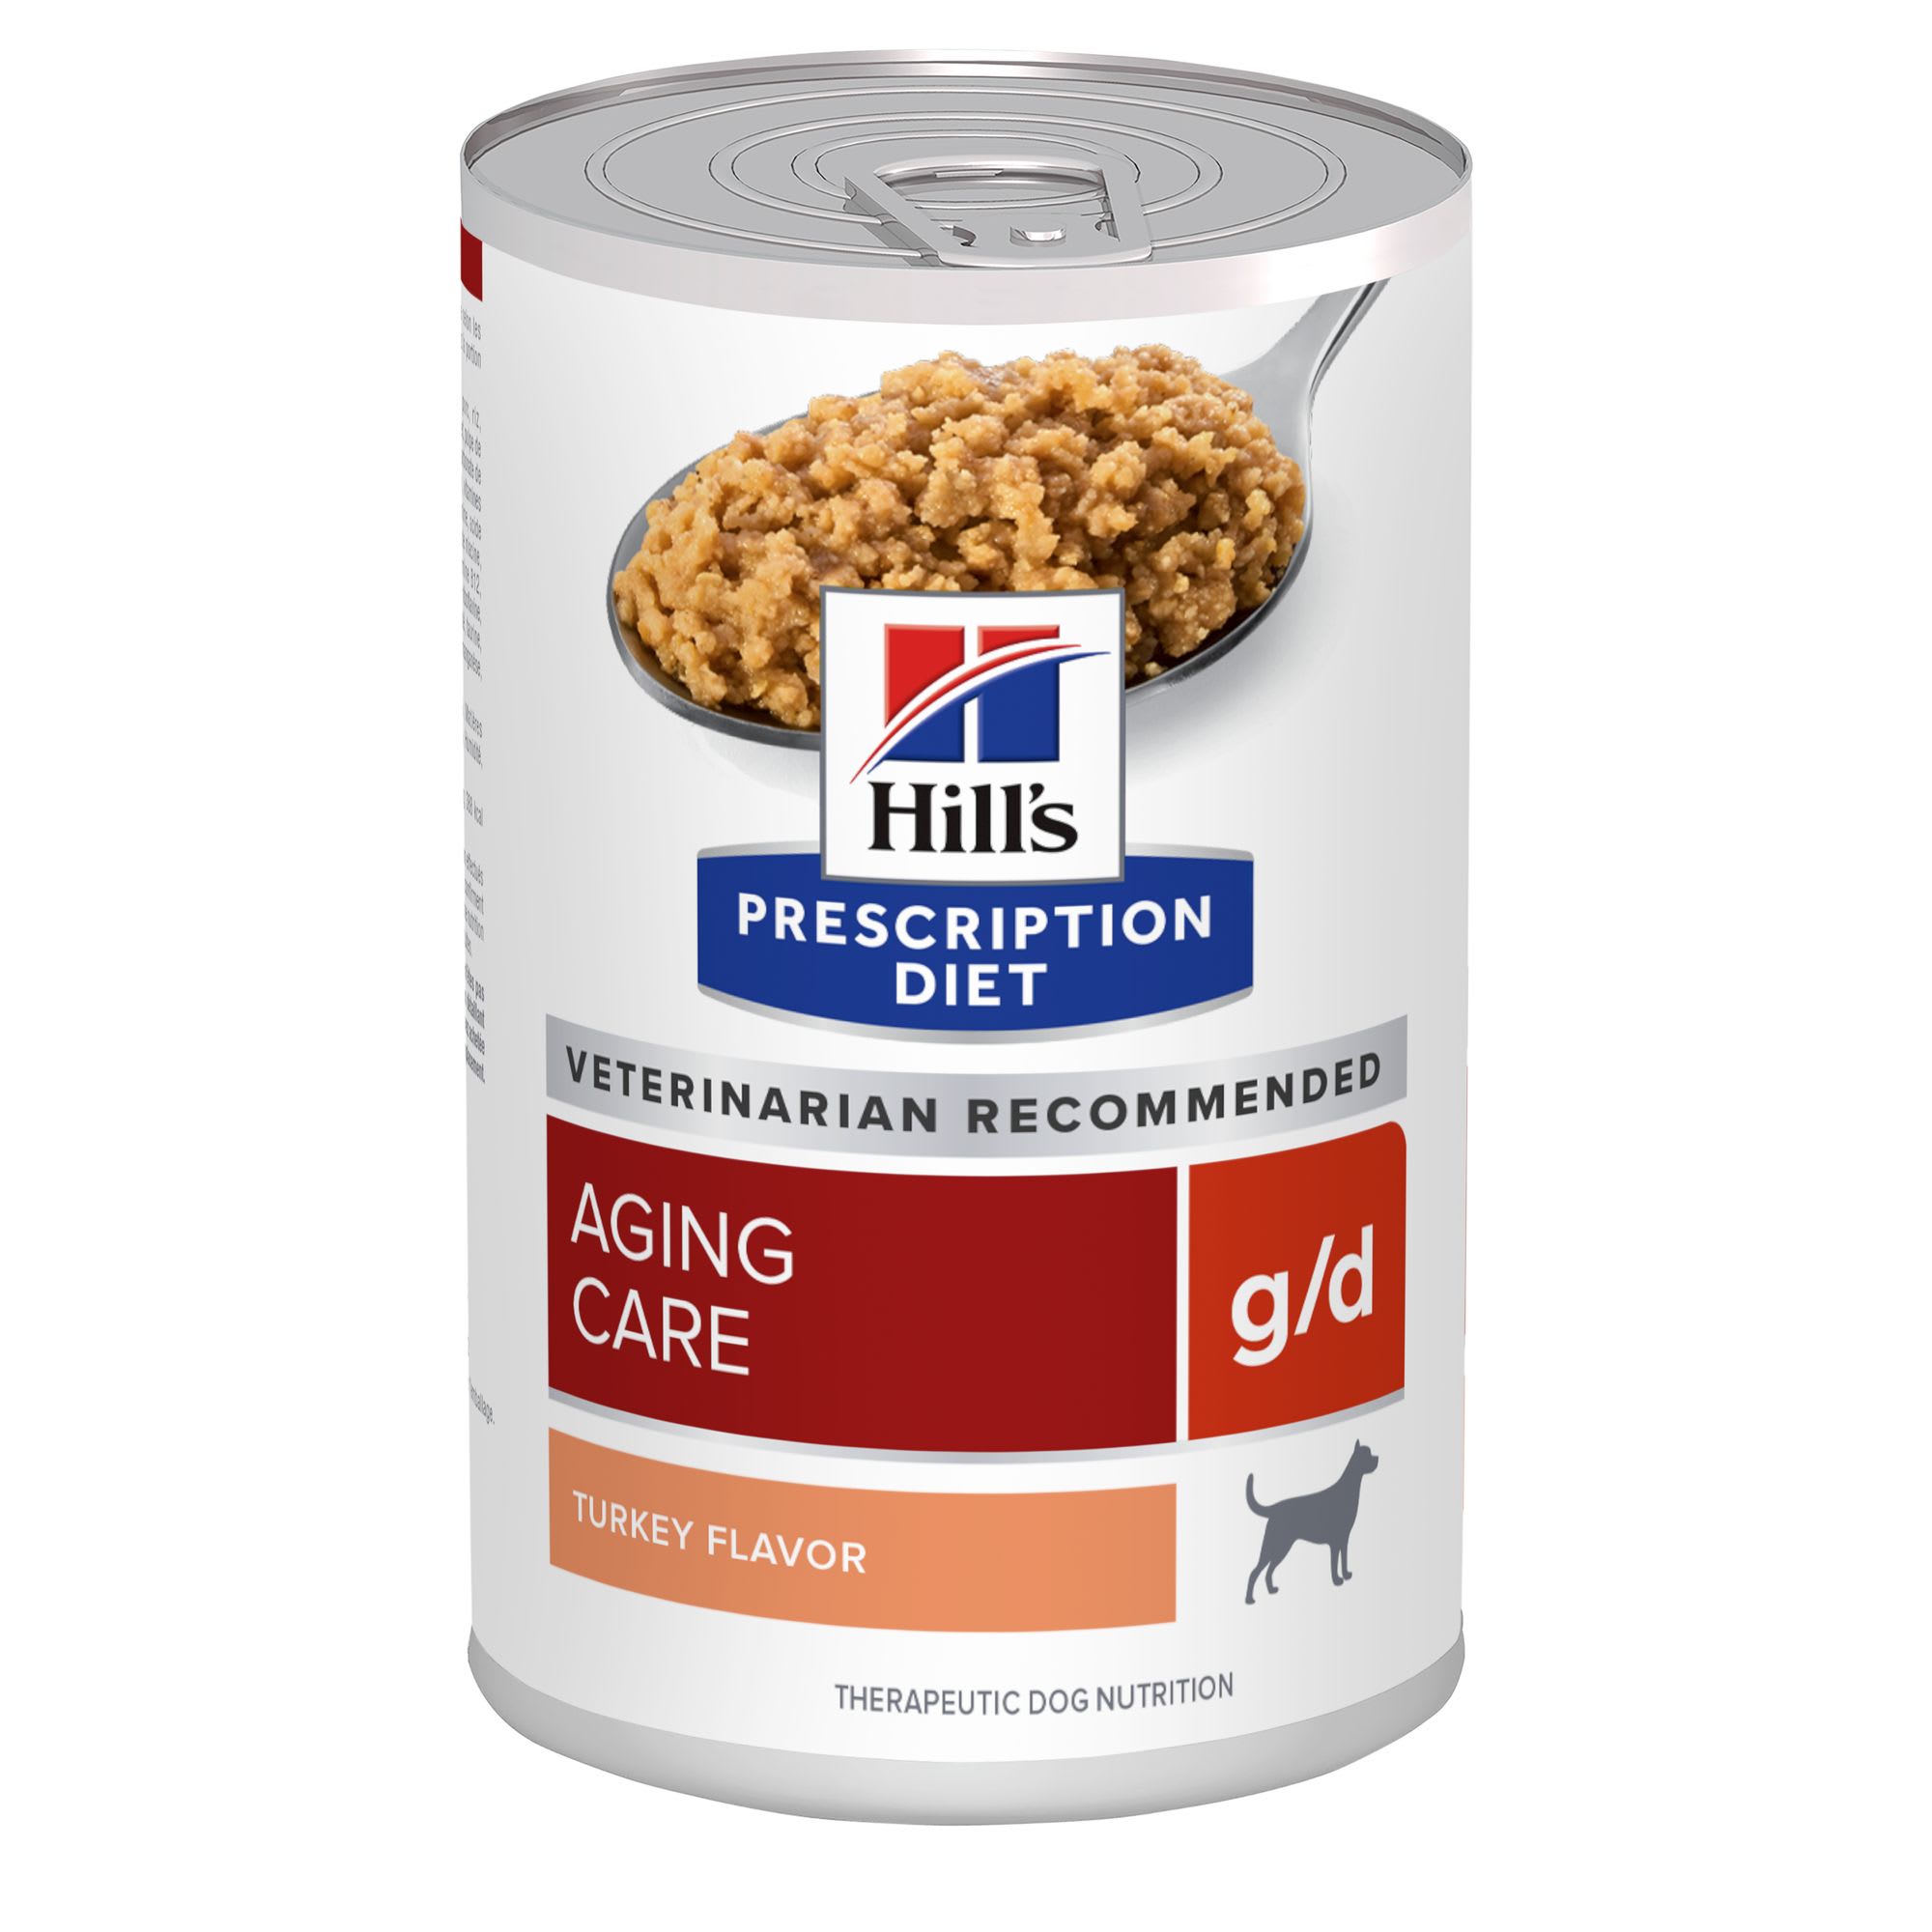 Photos - Dog Food Hills Hill's Prescription Diet Hill's Prescription Diet g/d Aging Care Turkey Fl 